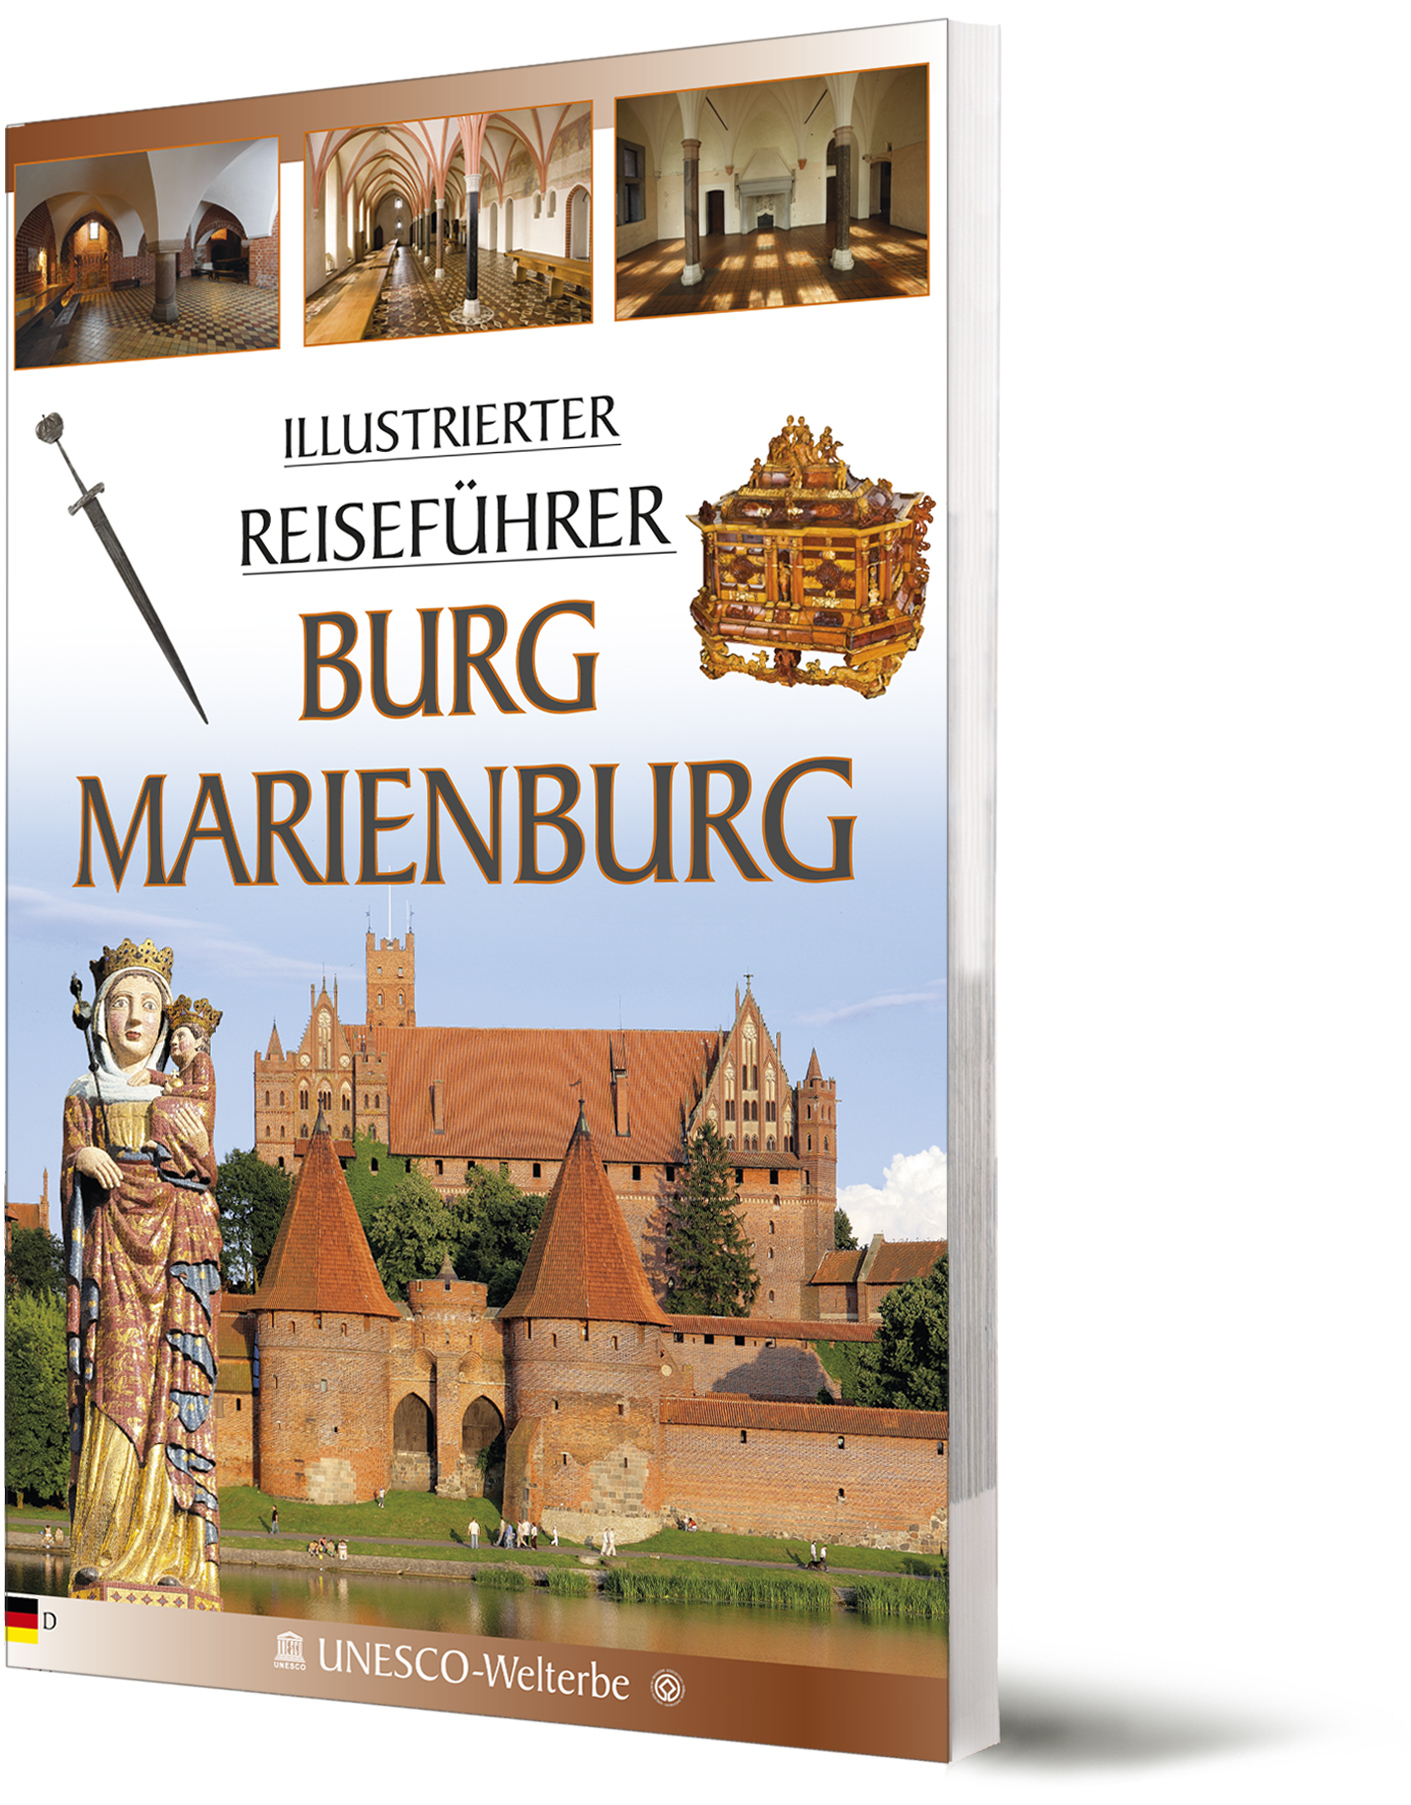 Marienburg Burg reisefuhrer